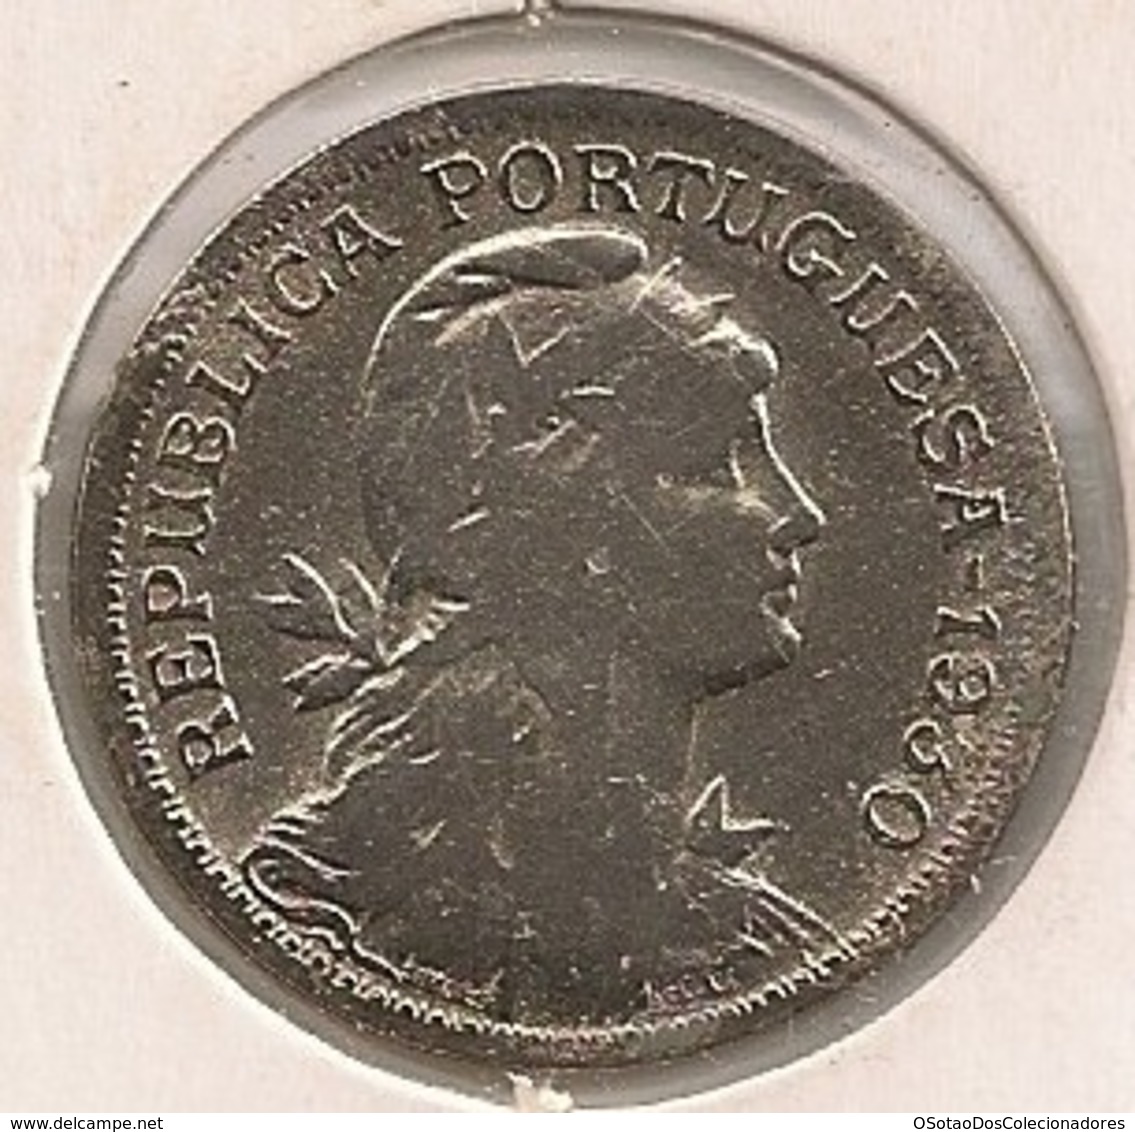 Moeda Cabo Verde Portugal - Coin Cabo Verde - 50 Centavos 1930 - MBC - Cape Verde